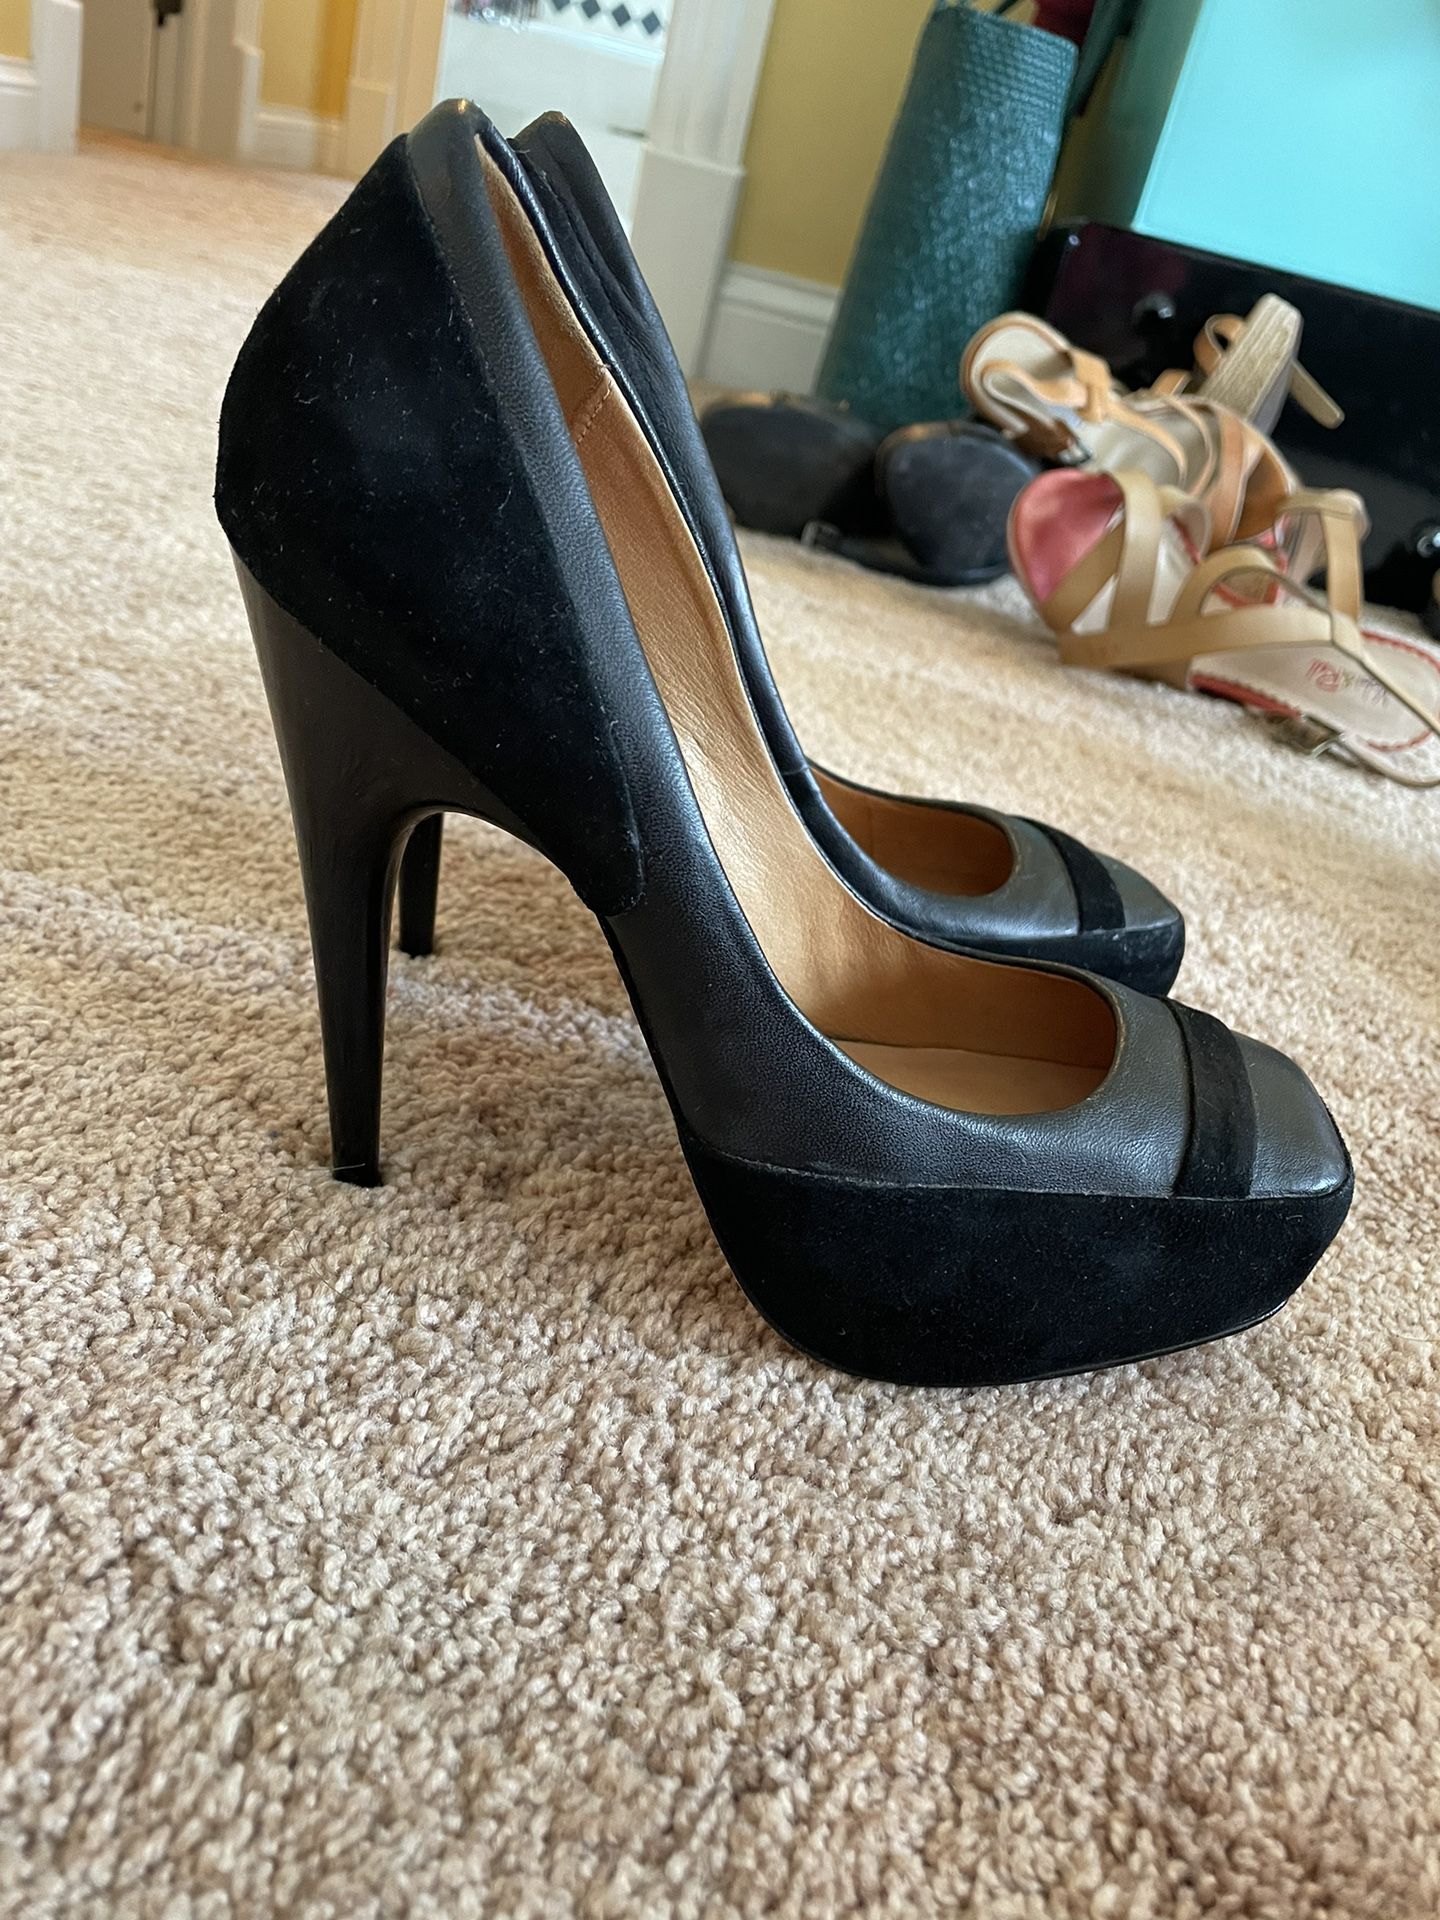 L.A.M.B. High Heel Shoes Black Size 8 1/2 M 